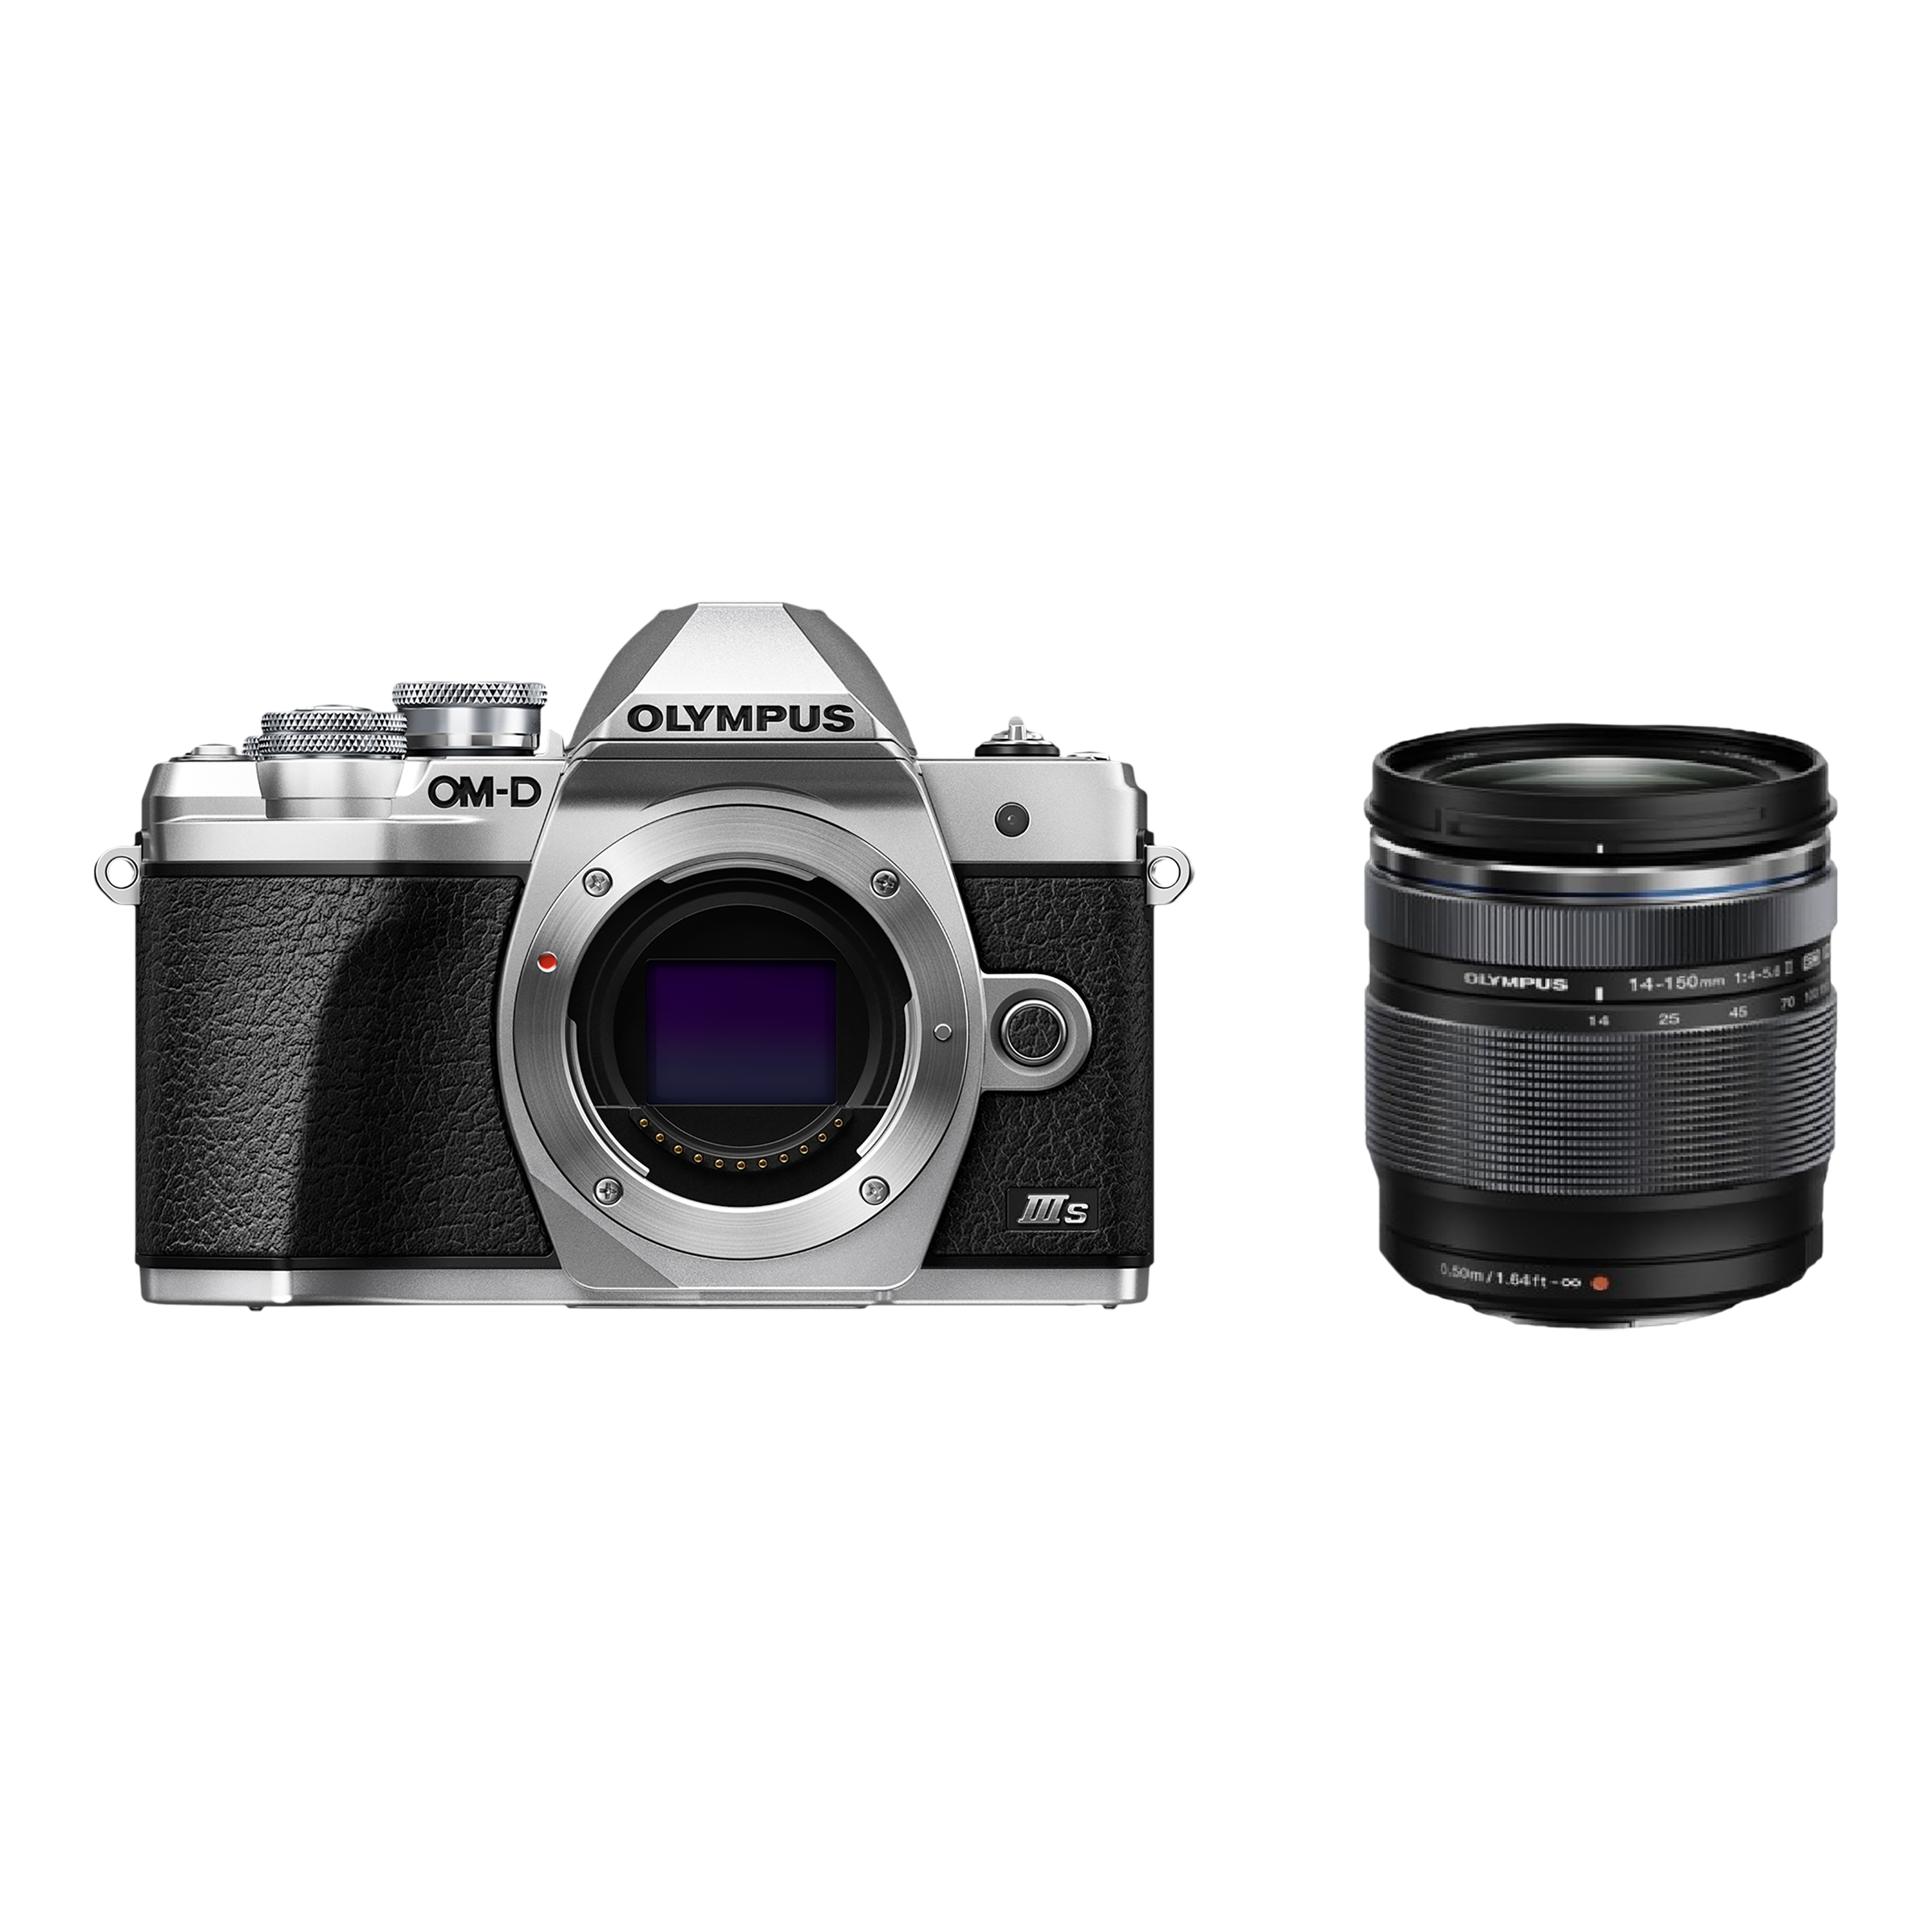 OLYMPUS OM-D E-M10 Mark III-S 20.4MP Mirrorless Camera (14-150 mm Lens,  17.3 x 13 mm Sensor, 5-Axis Image Stabilization)